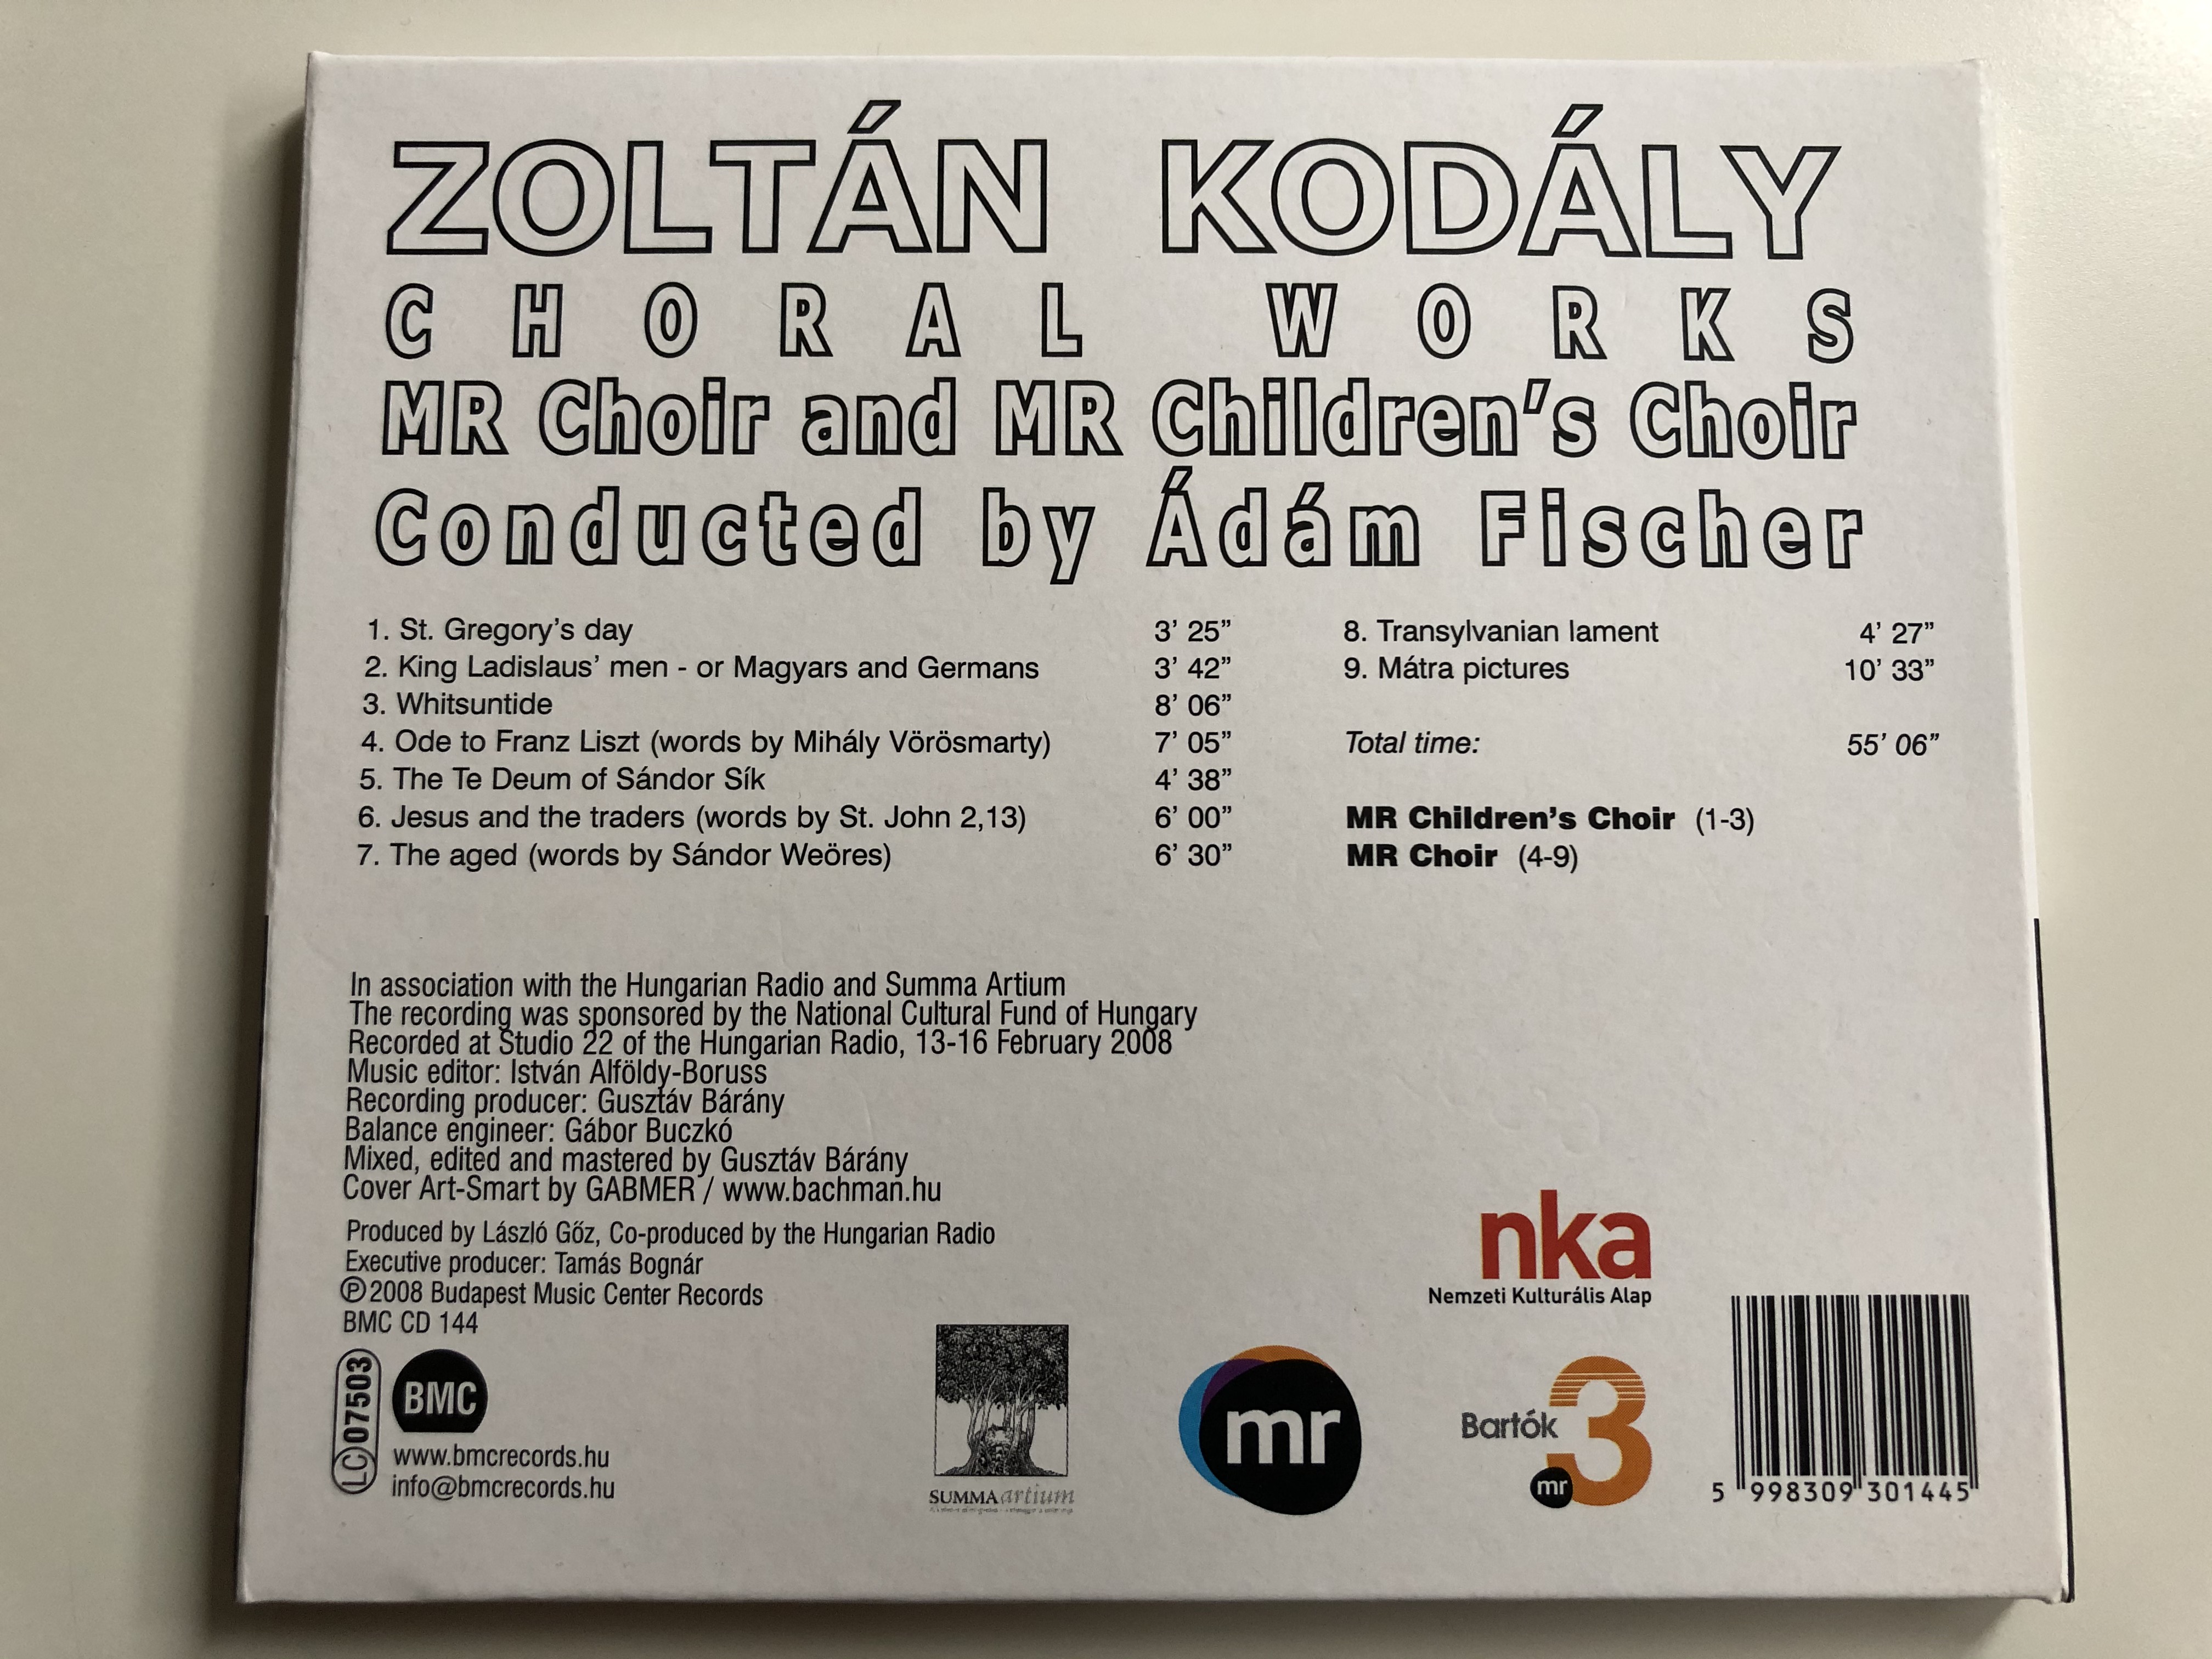 zolt-n-kod-ly-choral-works-mr-choir-and-mr-children-s-choir-conducted-by-adam-fischer-budapest-music-center-records-audio-cd-2008-bmc-cd-144-7-.jpg